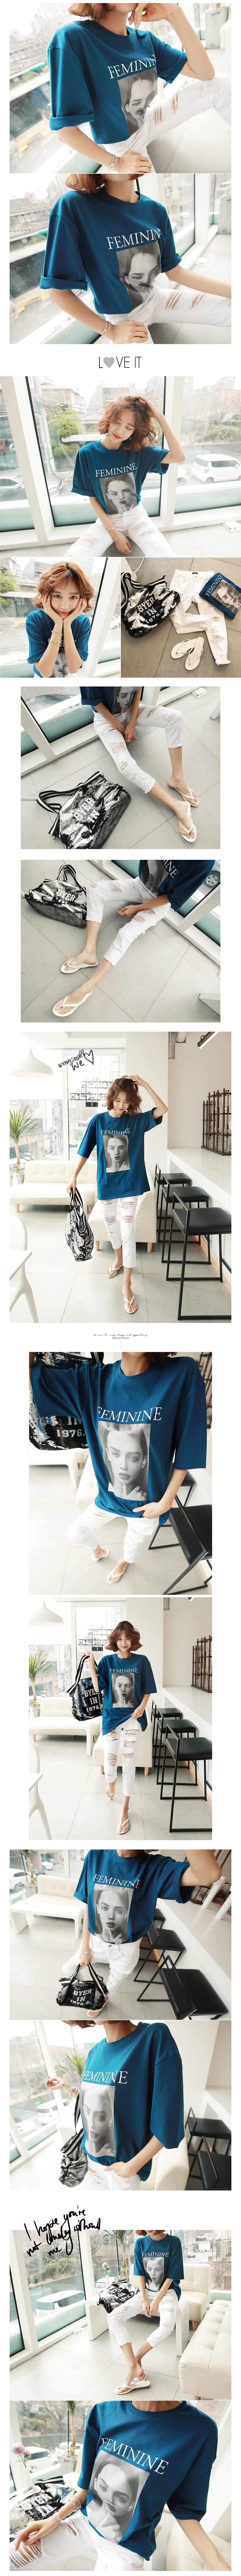 KOREA FEMININE Graphic Oversized T-Shirt #Cobalt Blue One Size(S-M) [Free Shipping]